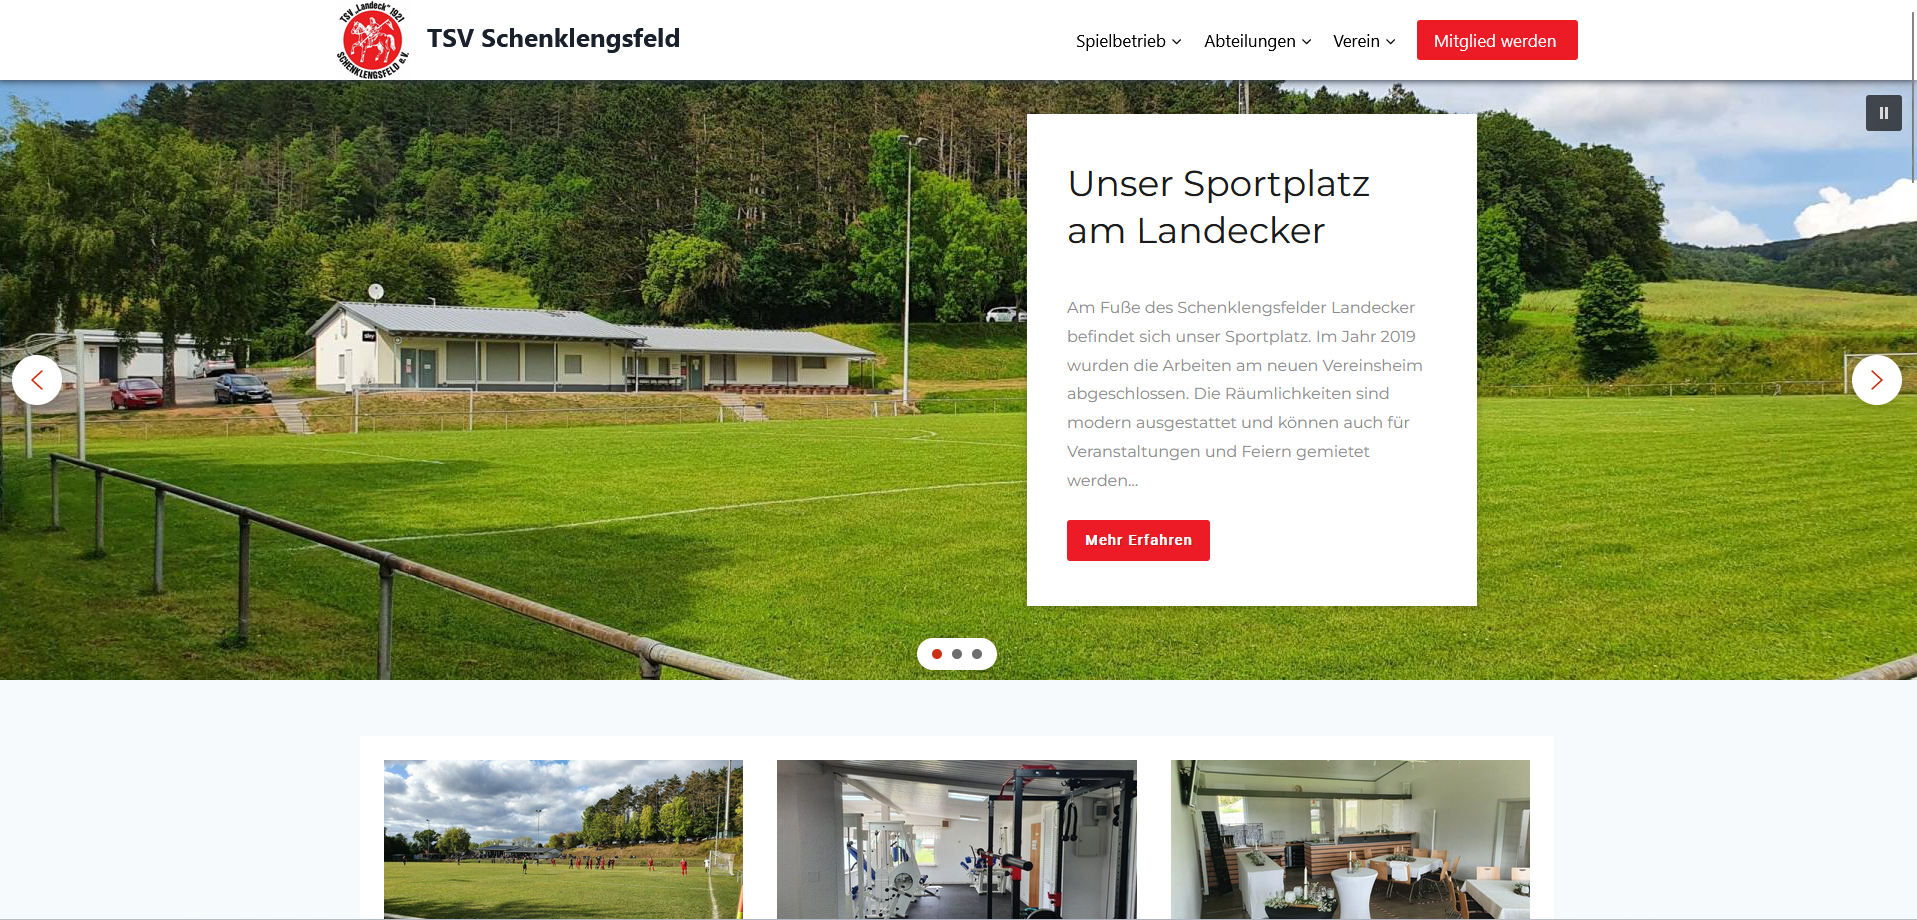 tsv-schenklengsfeld - Sportverein Schenklengsfeld